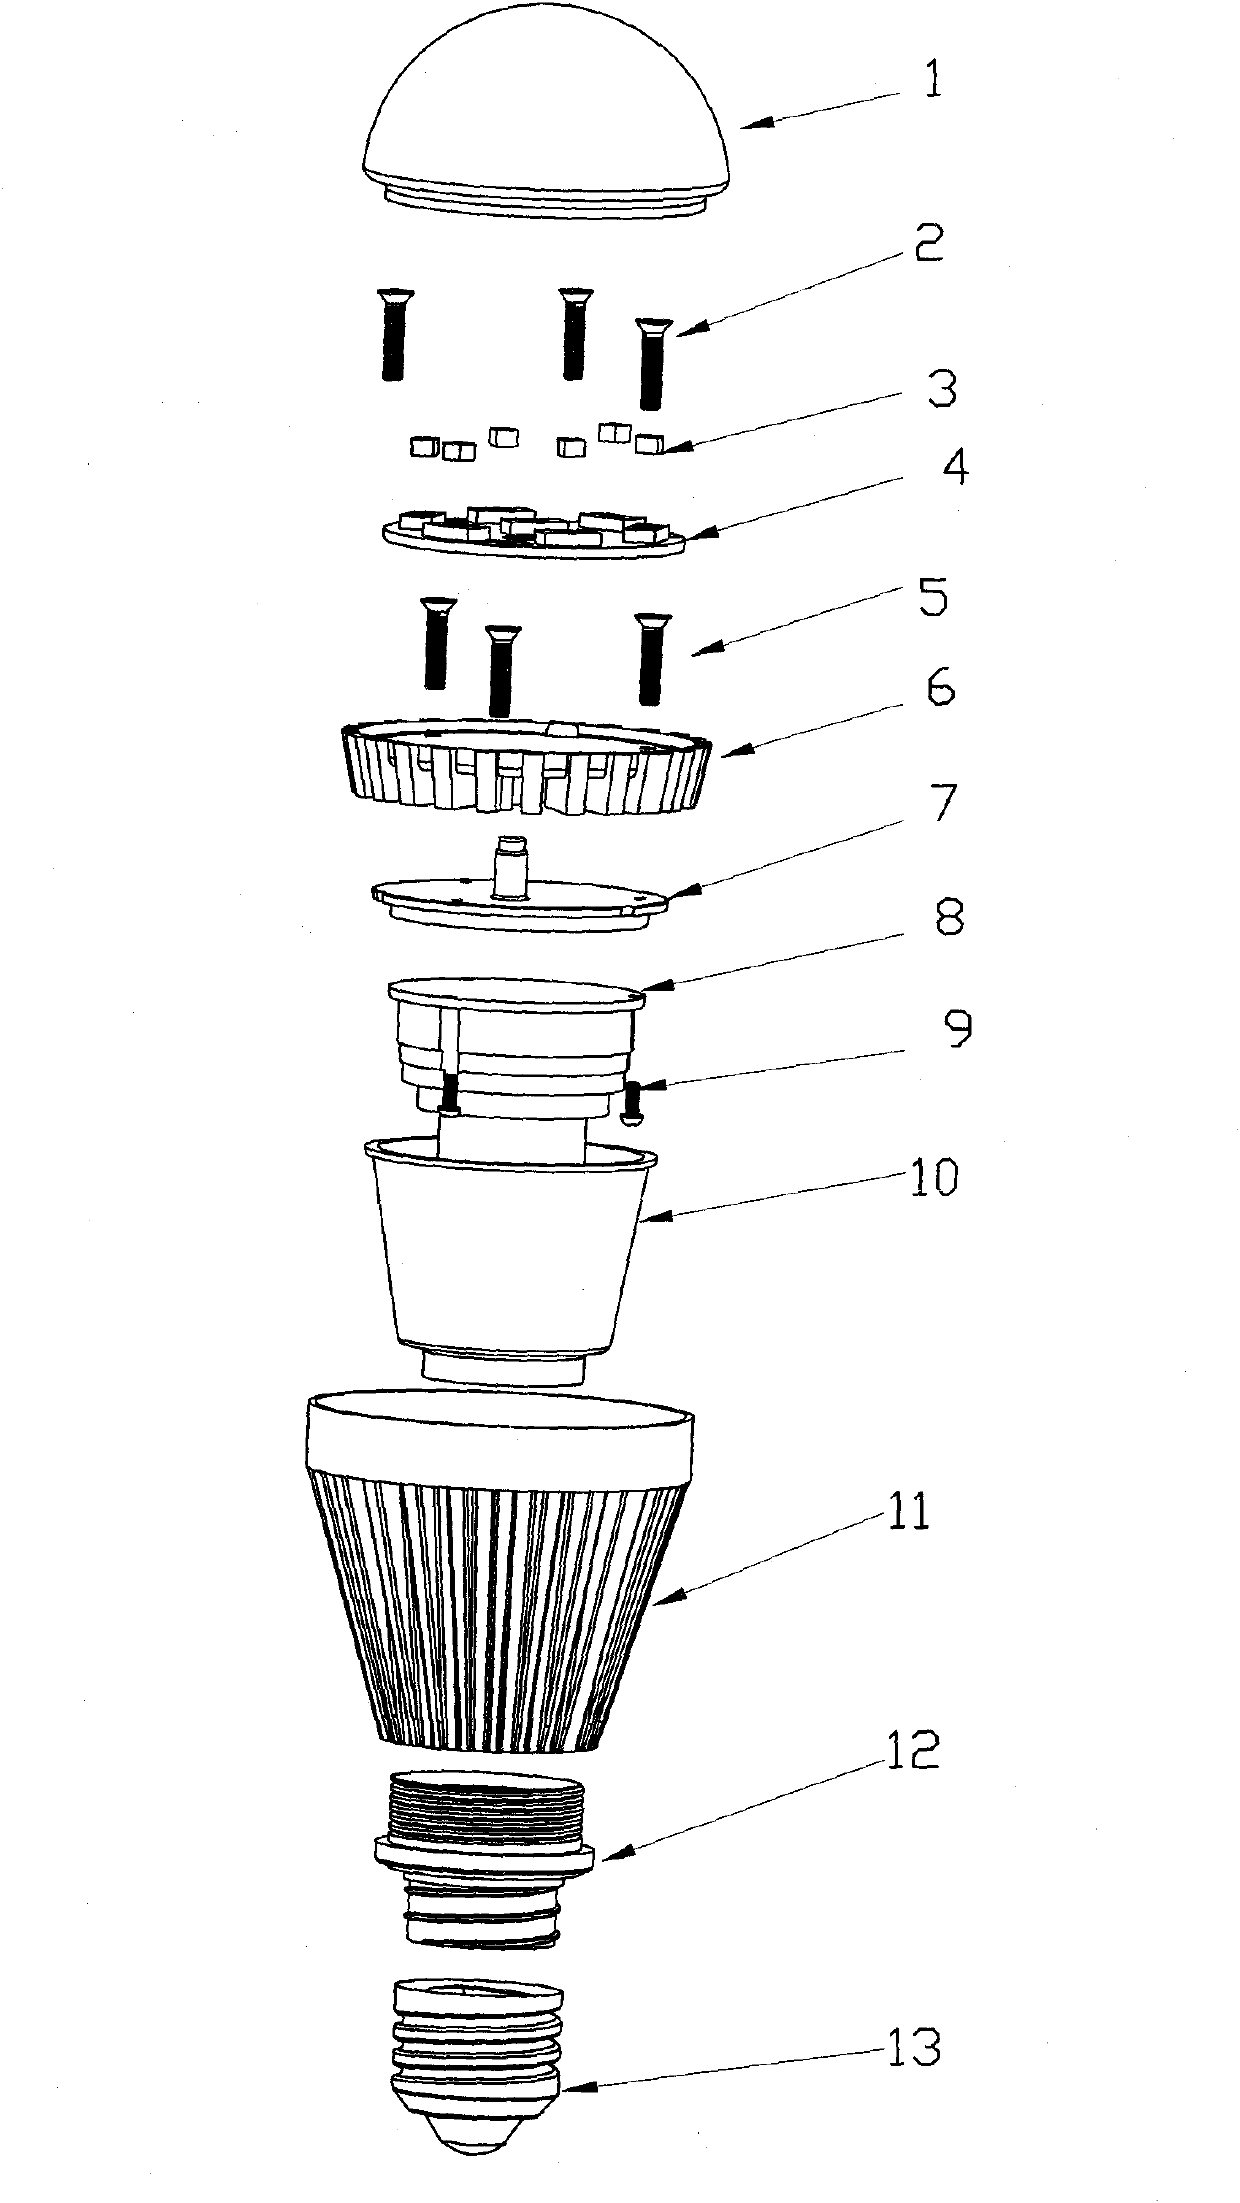 Light emitting diode (LED) bulb lamp